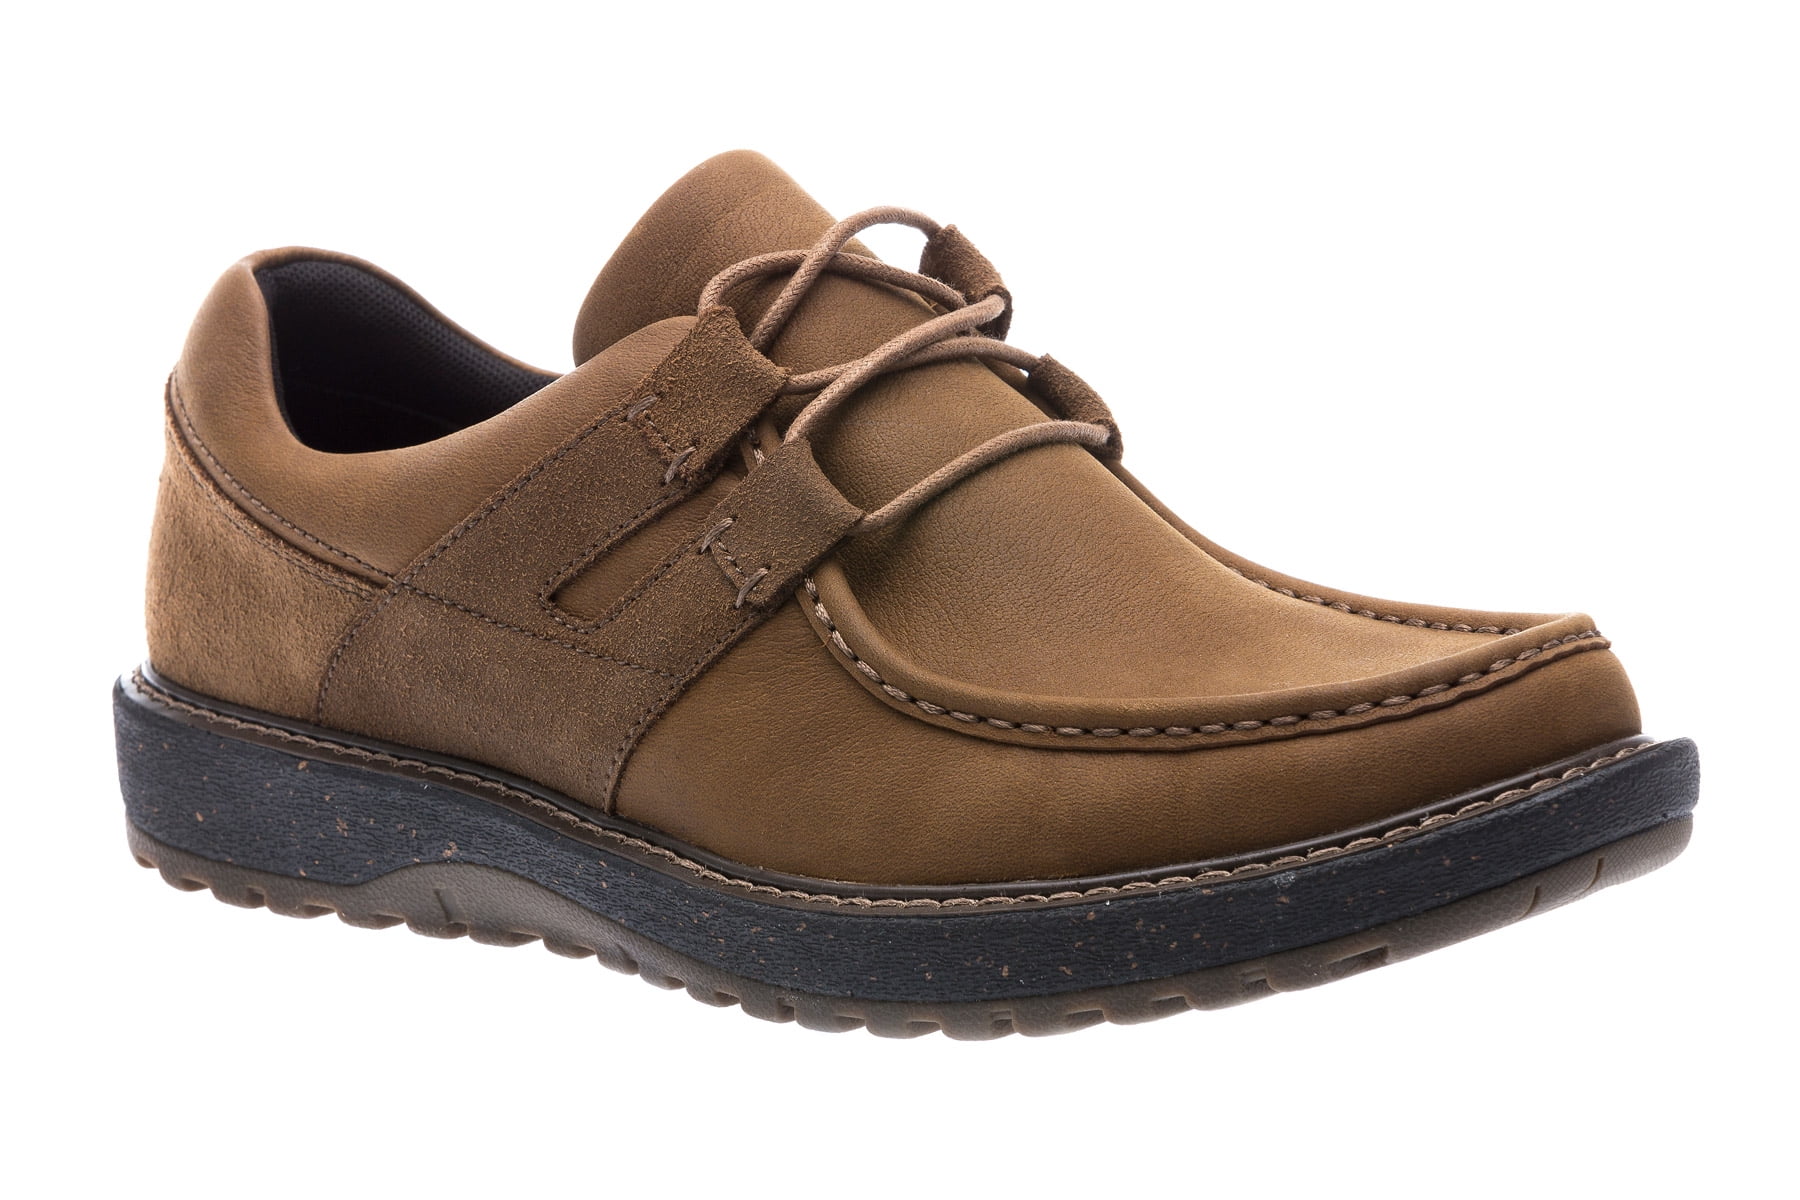 ABEO Footwear - ABEO Men's Barlow - Casual Shoes - Walmart.com ...